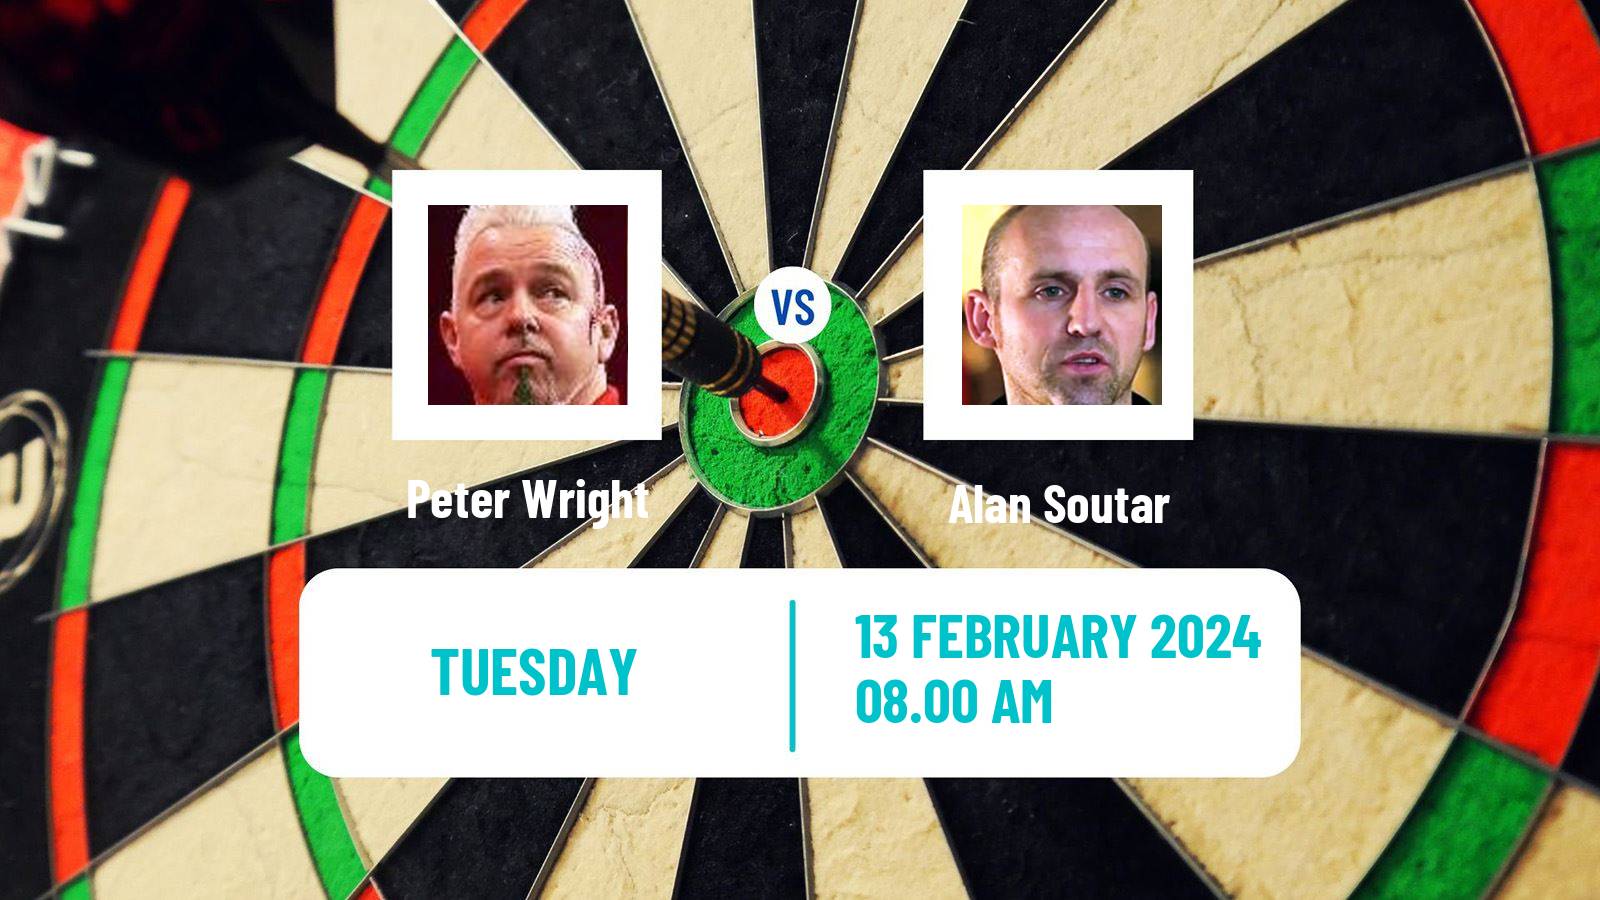 Darts Players Championship 2 Peter Wright - Alan Soutar